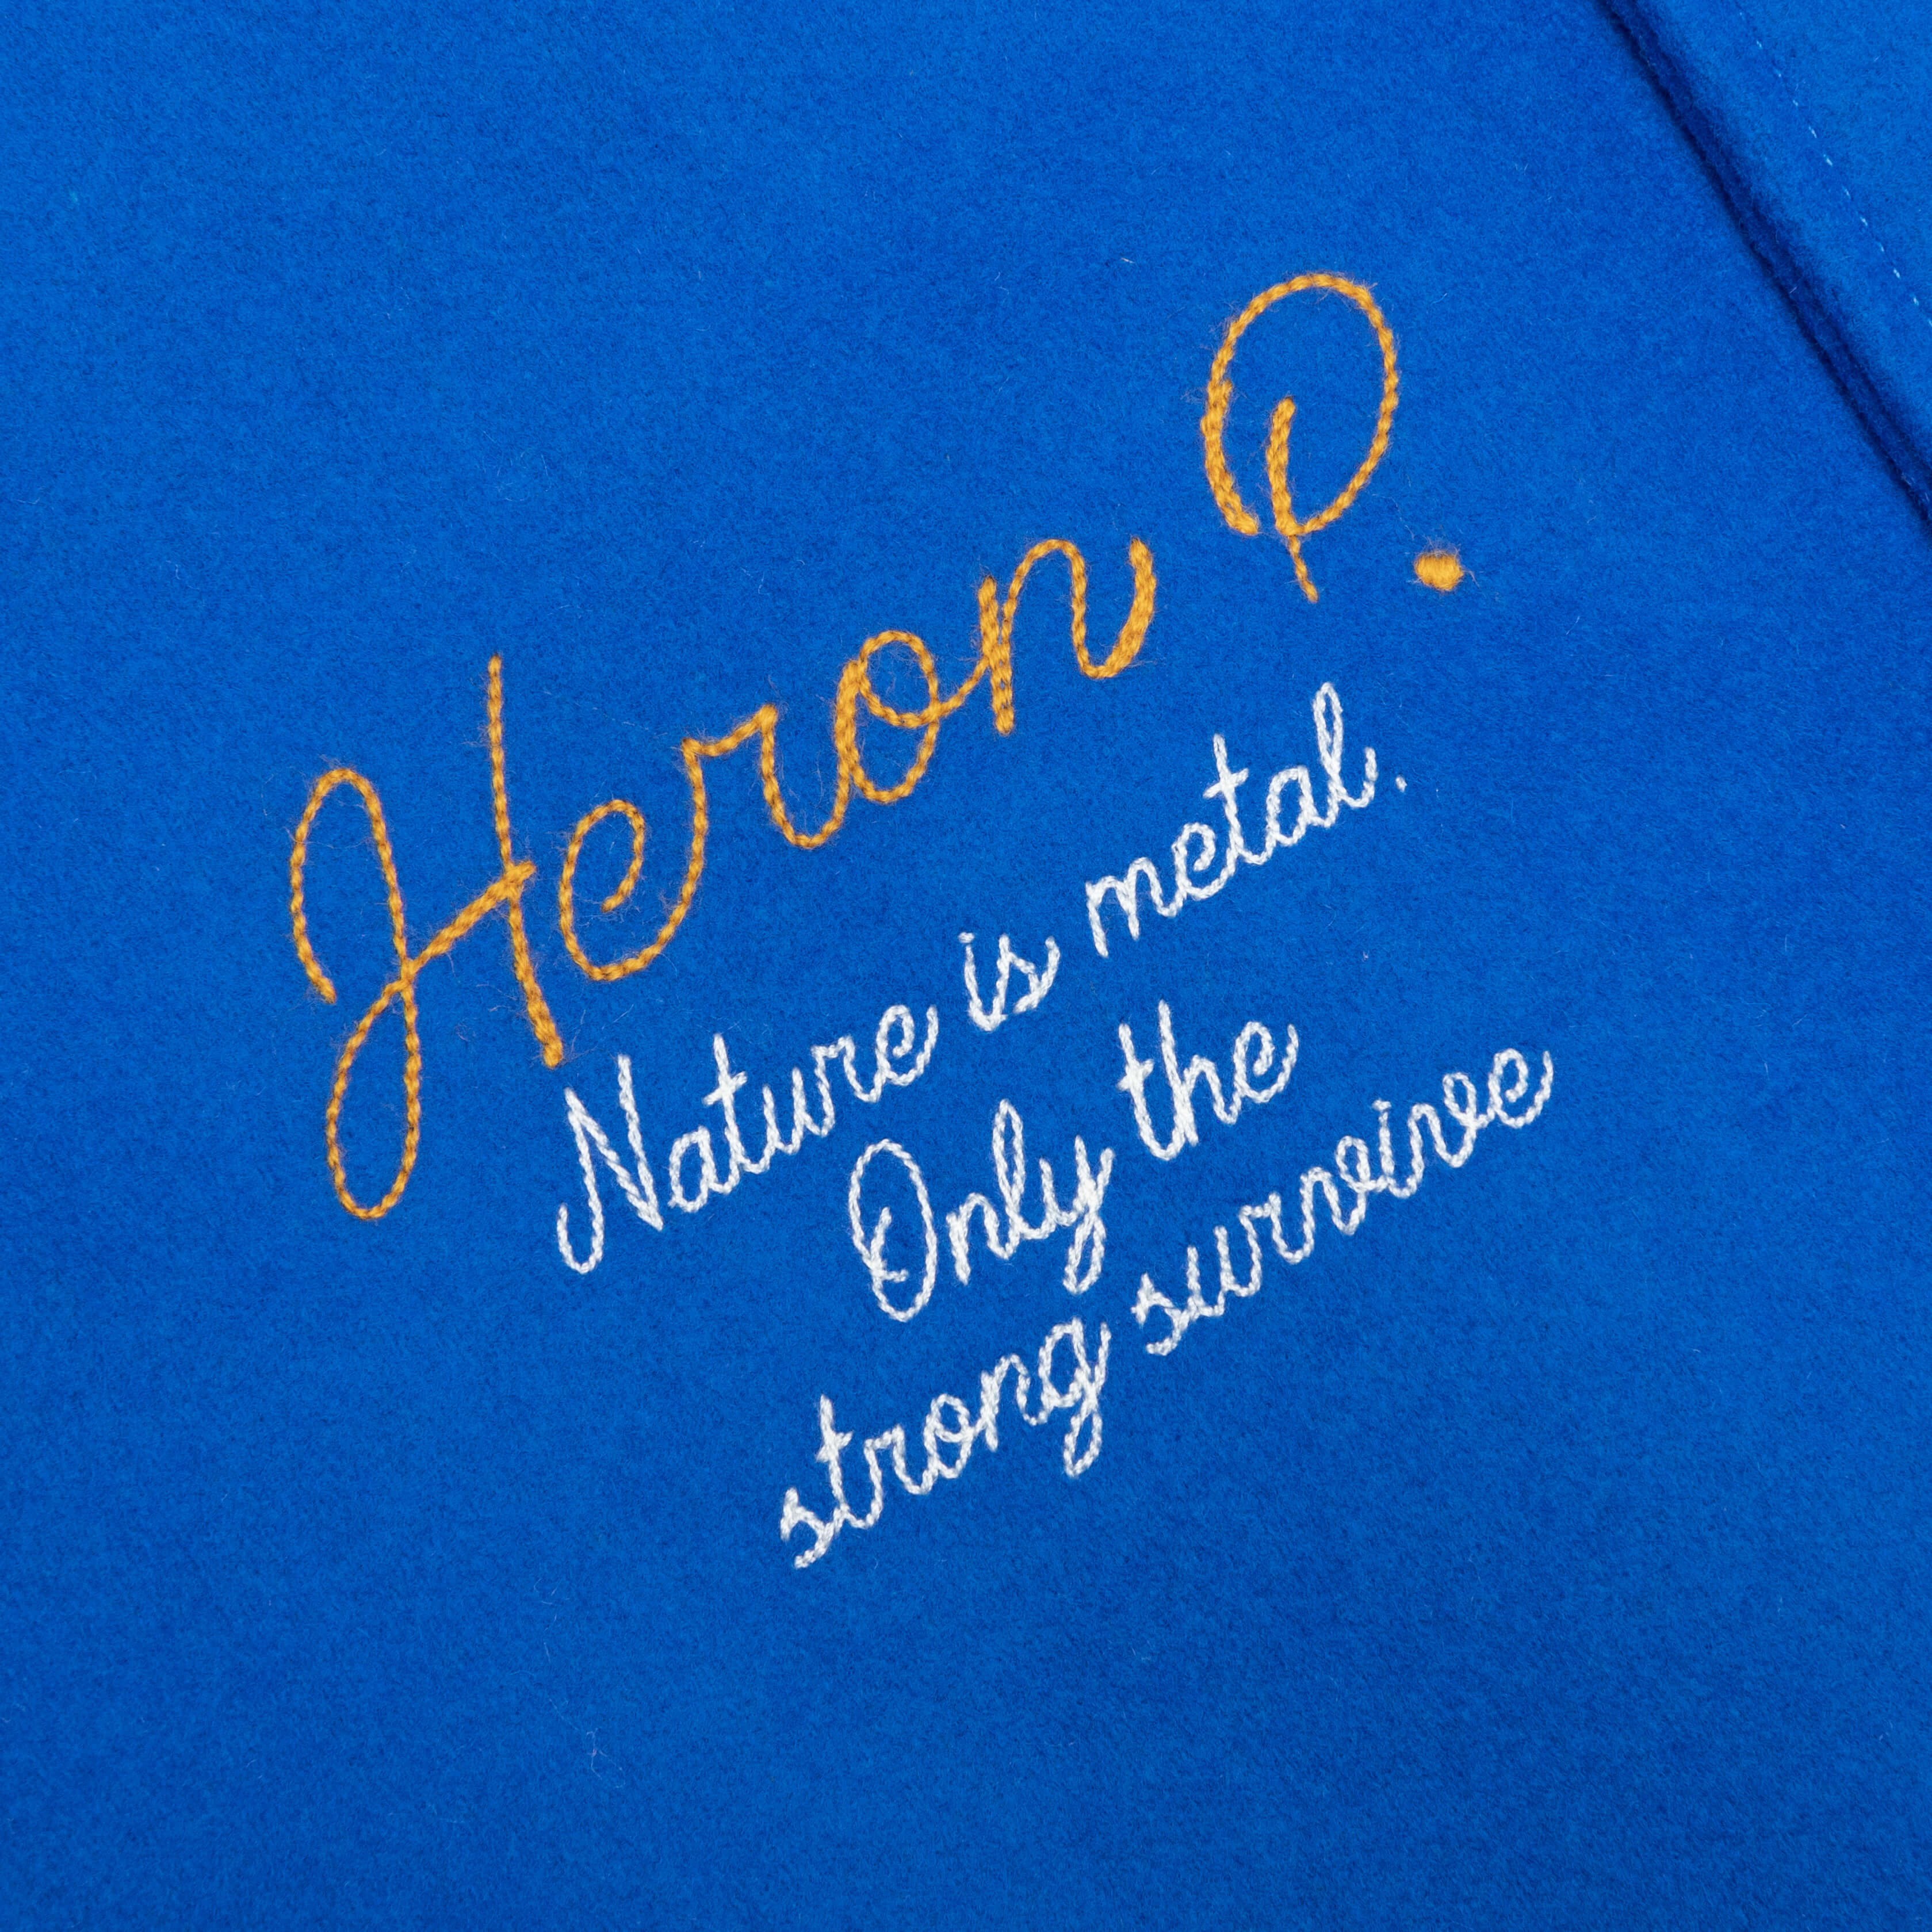 Heron Preston Heron Patches Varsity Jacket - Blue Yellow – Philip